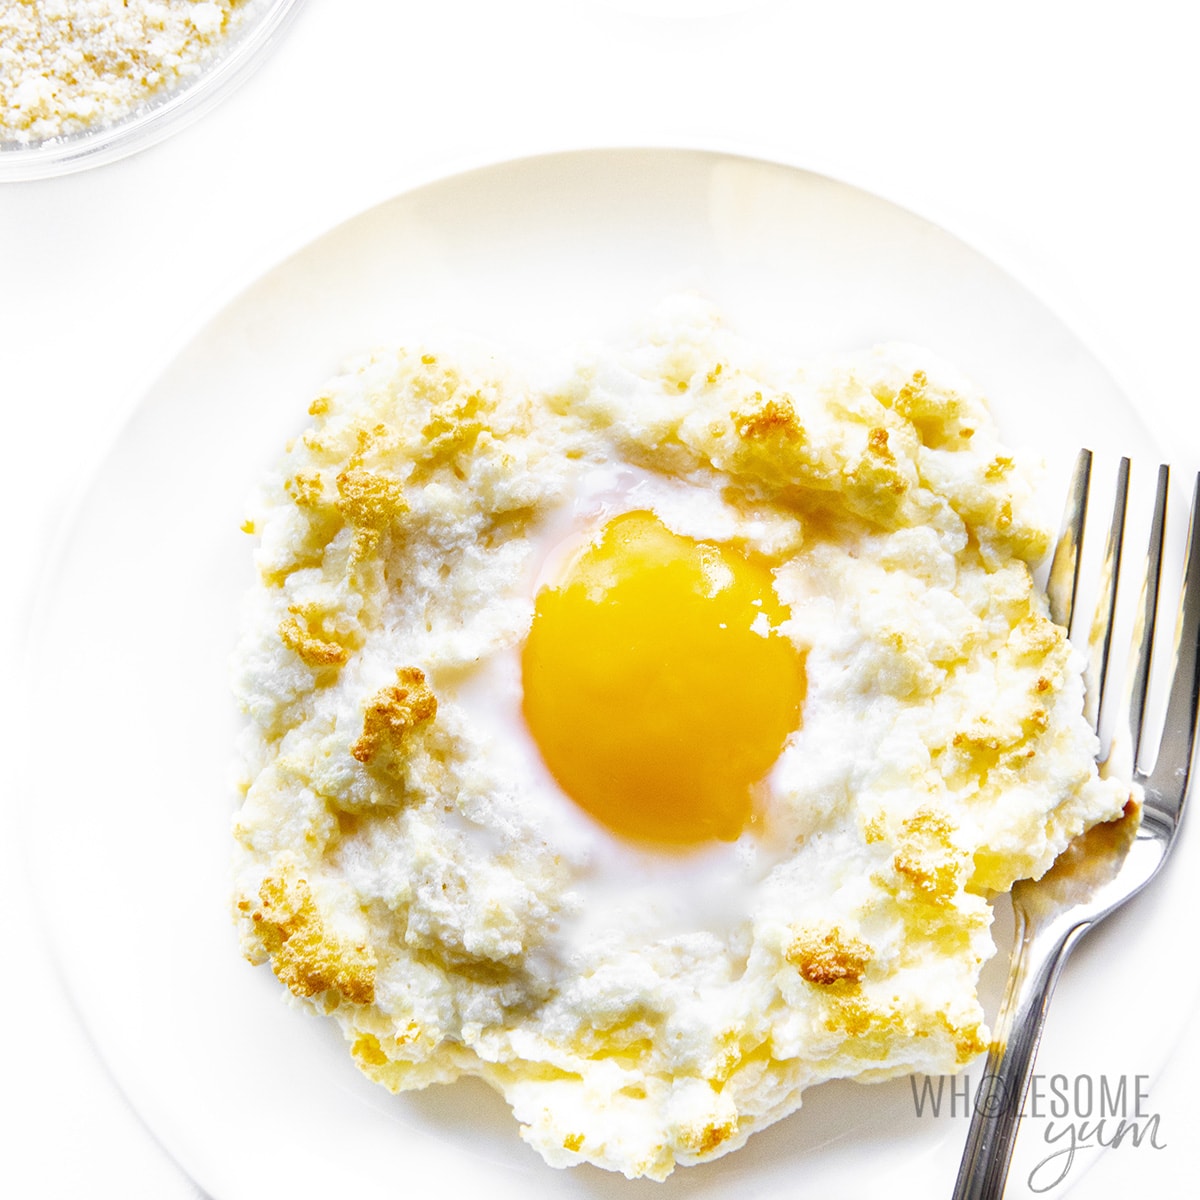 Garlic and Parmesan Egg Clouds